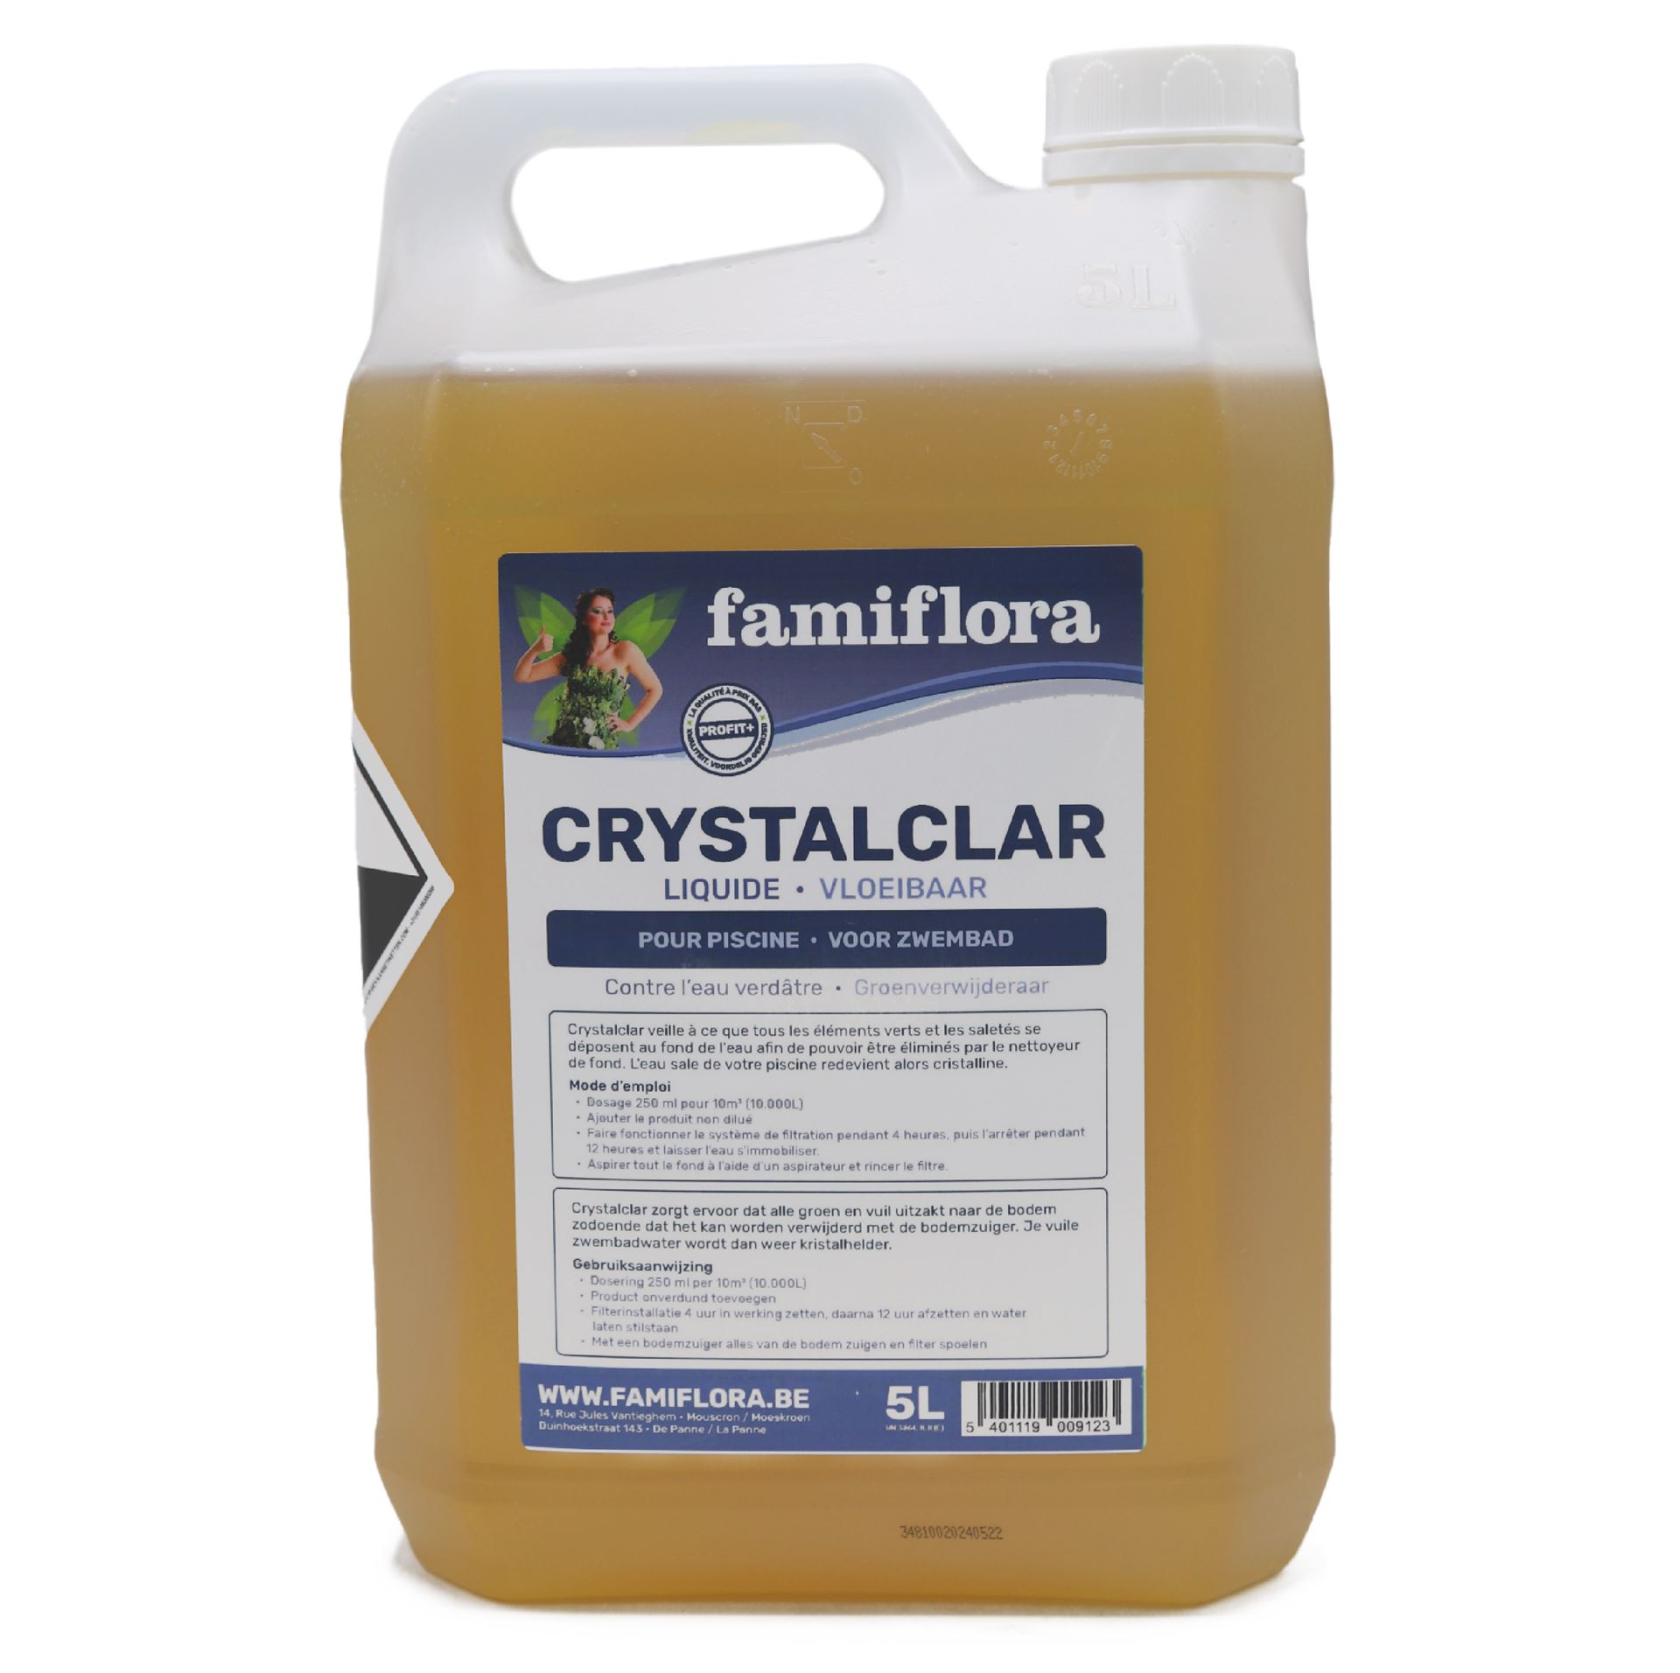 Famiflora Crystalclar liquid 5L - green remover